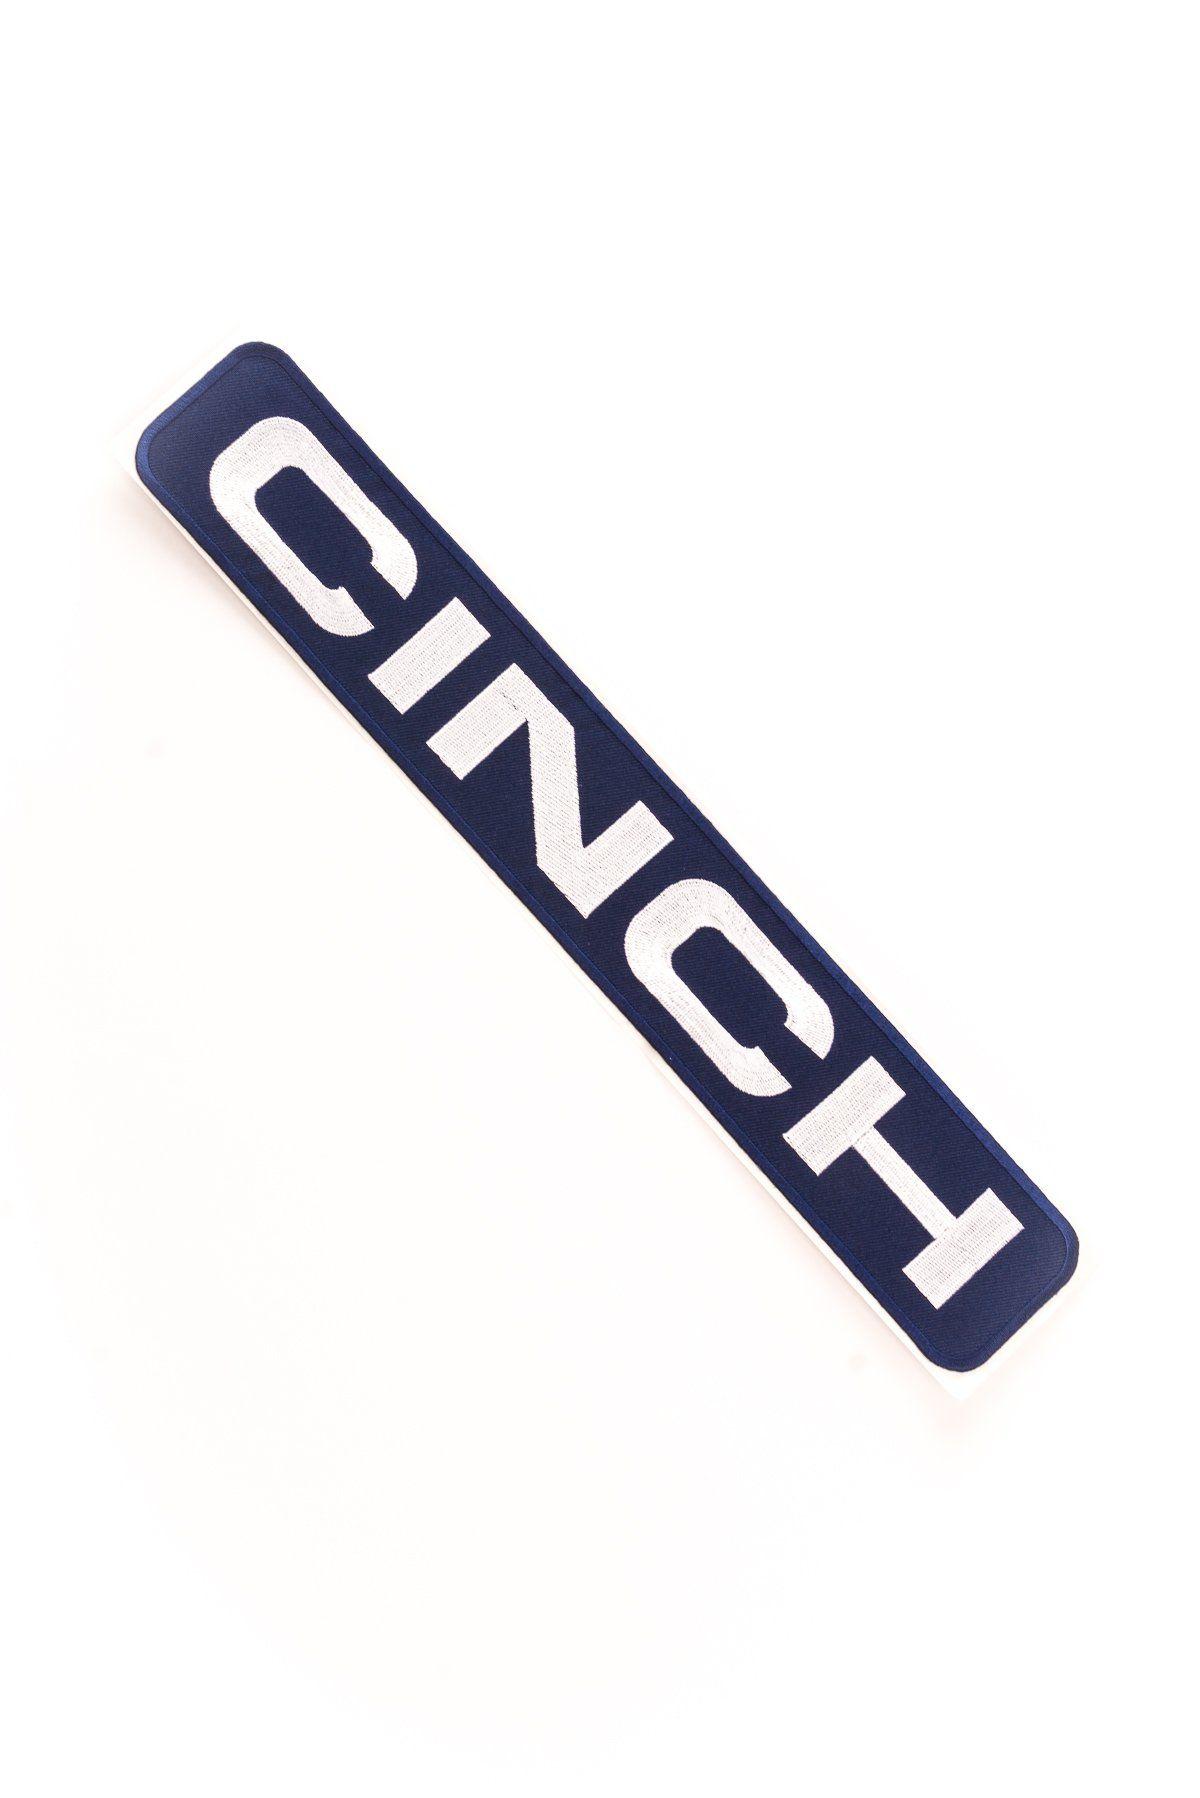 Cinch Logo - CINCH Jeans | CINCH Blue Logo Patch - 14.75